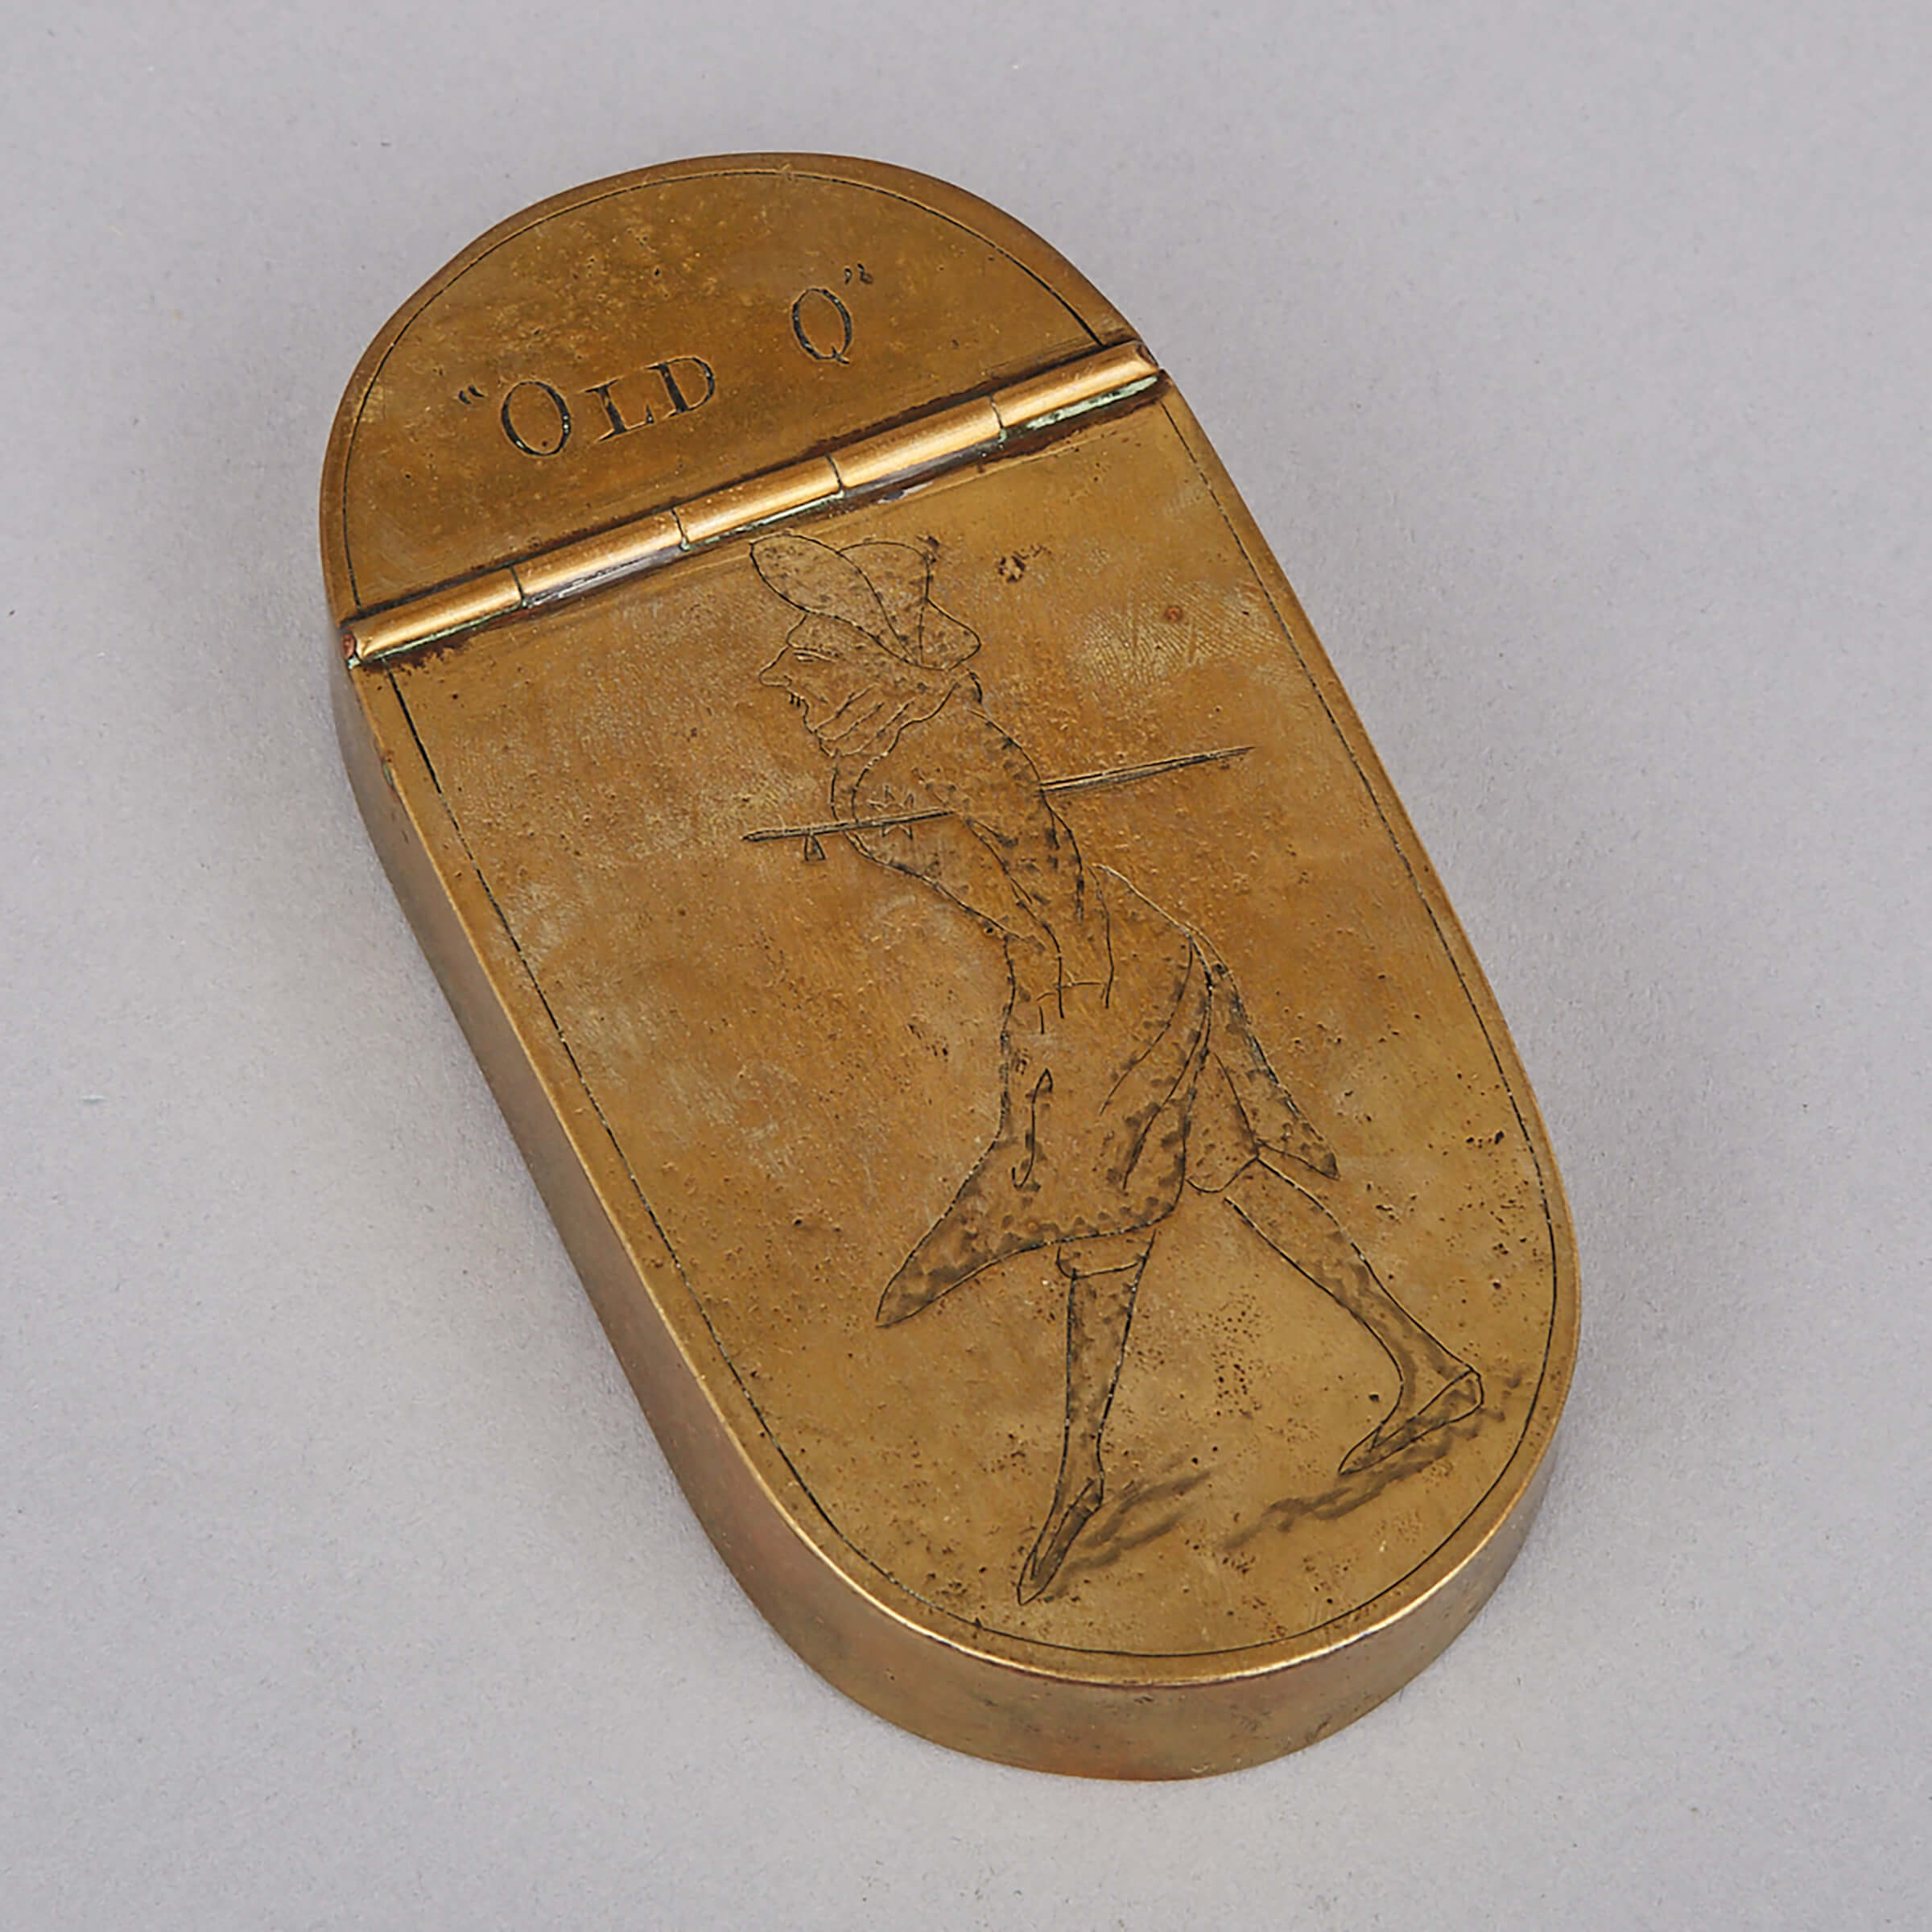 George III Brass “Old Q” Snuff Box, late 18th century